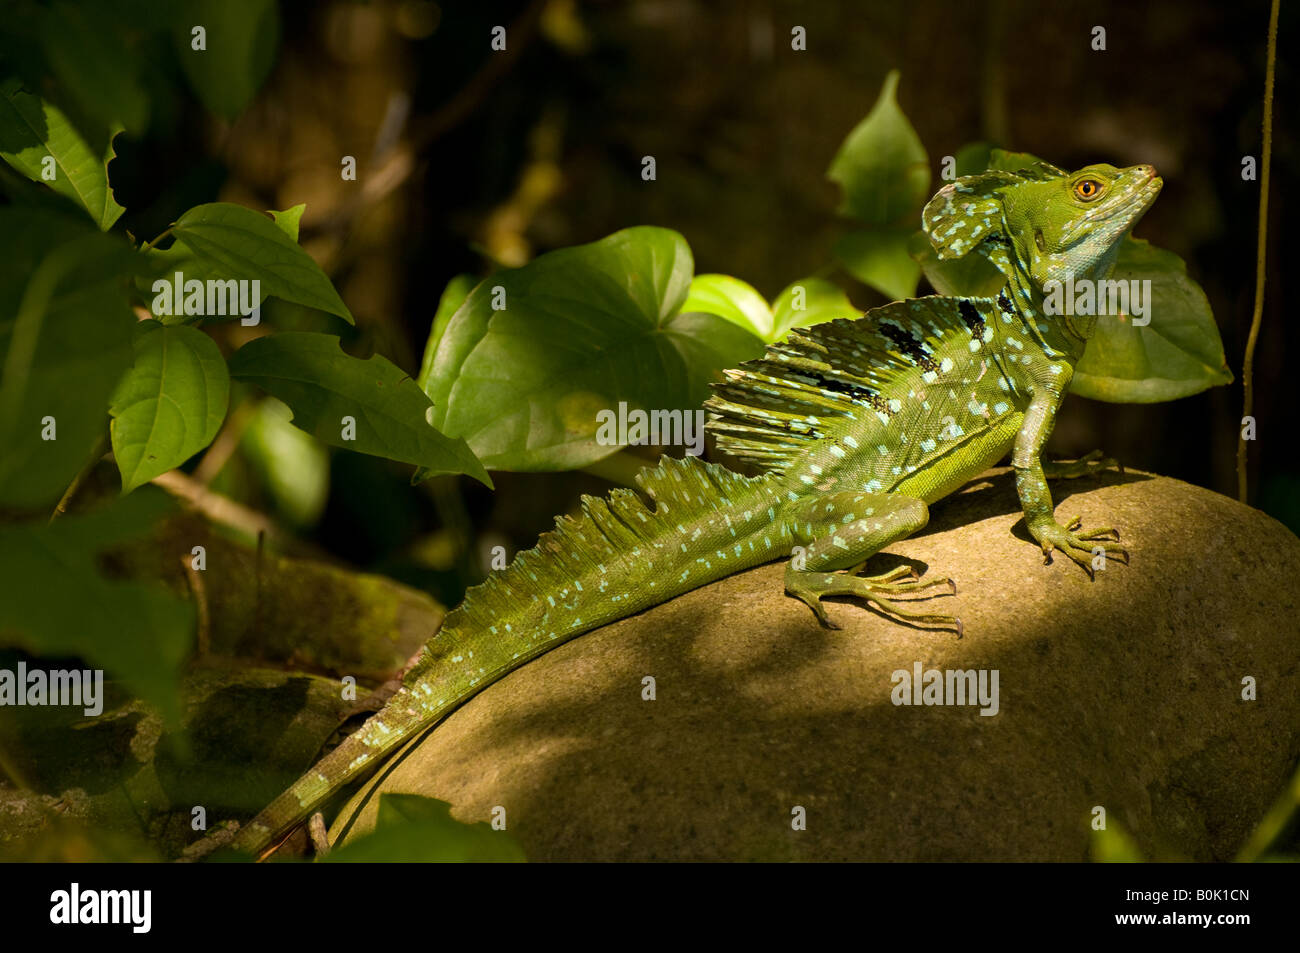 COSTA RICA Emerald Basilik Lizard or Jesus Christ Lizard in rainforest Stock Photo